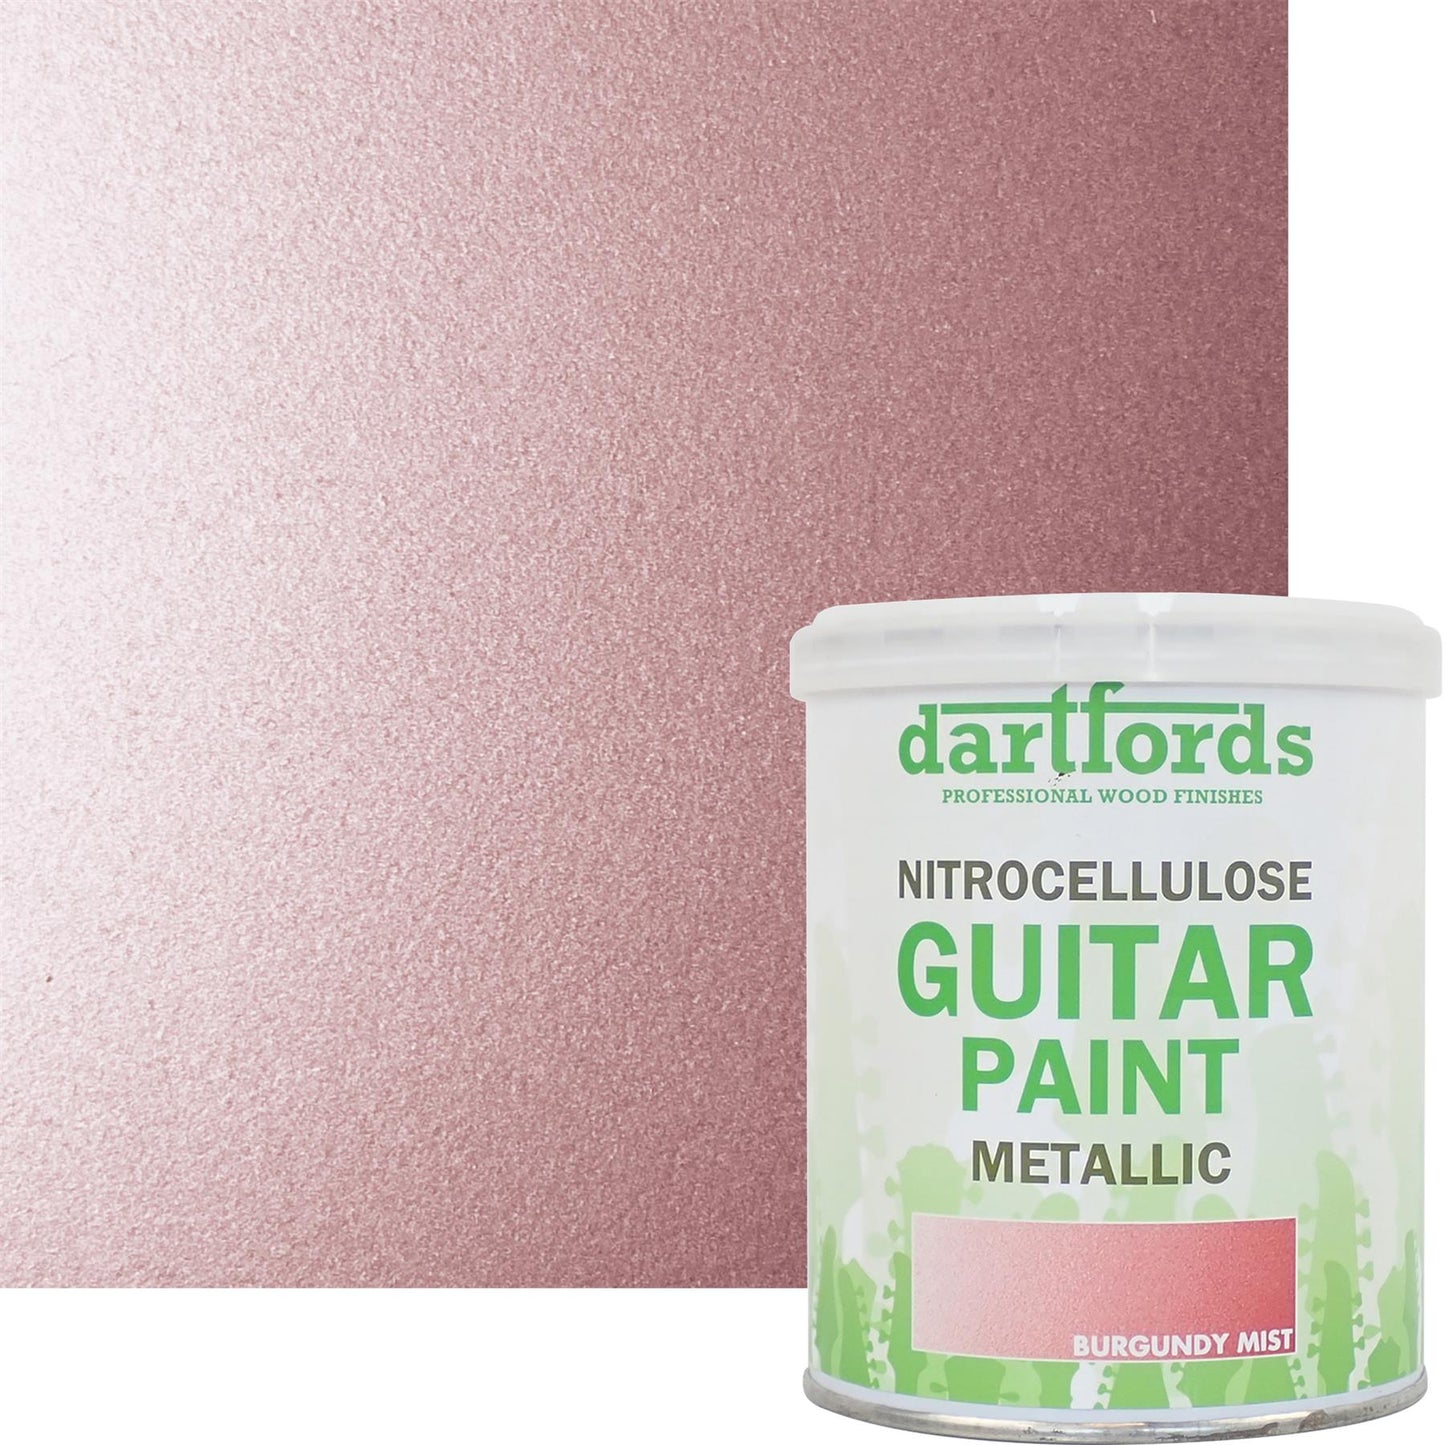 dartfords Burgundy Mist Metallic Nitrocellulose Guitar Paint - 1 litre Tin